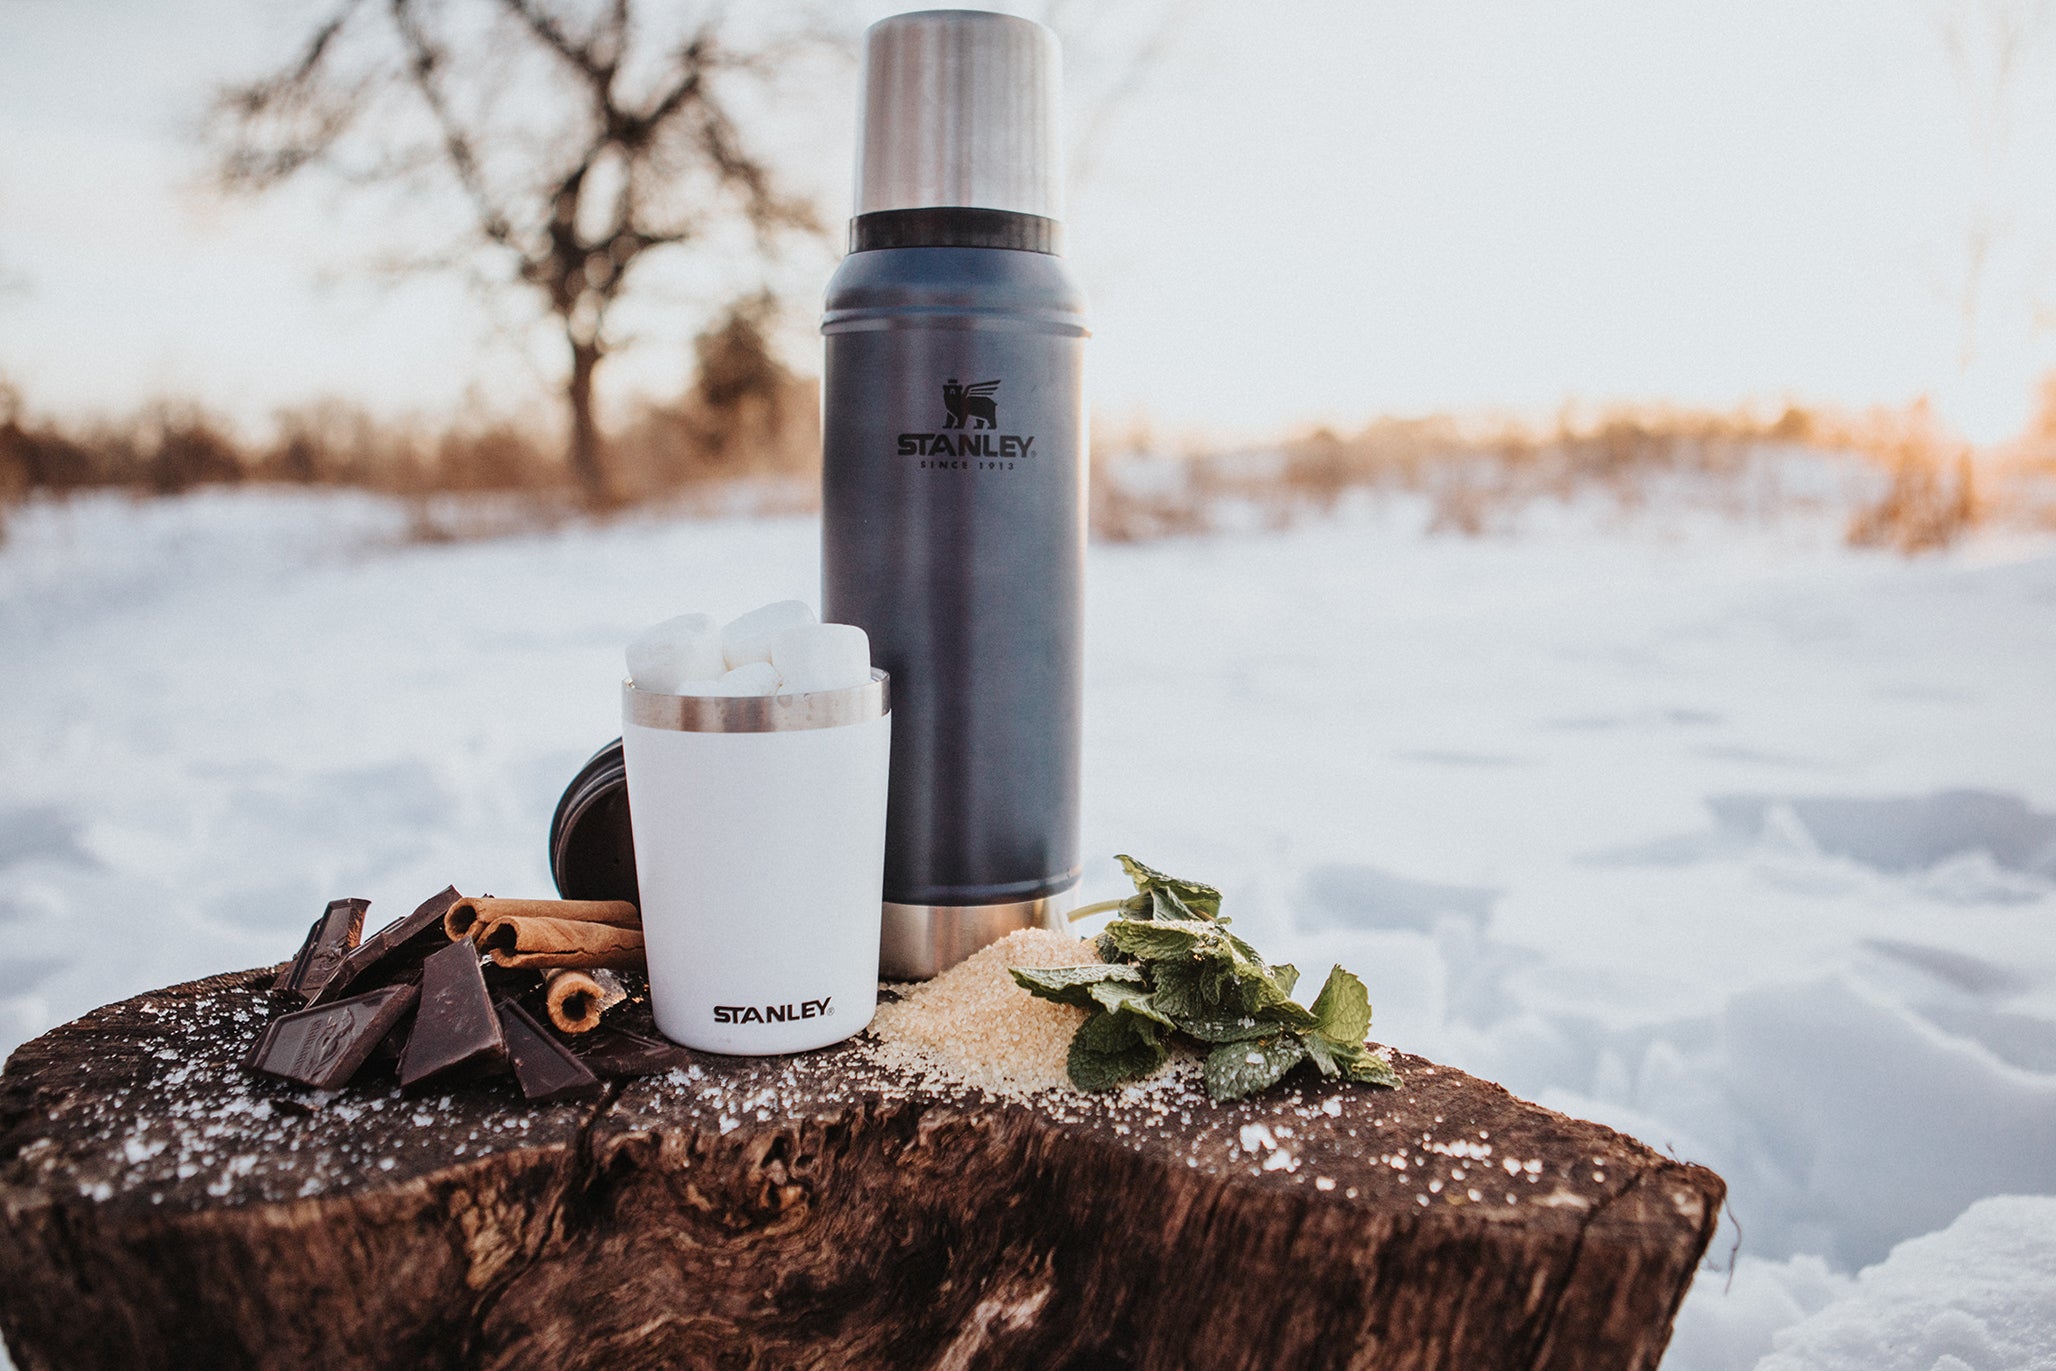 Stanley 1-qt Legendary Bottle and 8-oz Shortstack Travel Mug on a tree stump in a snowy field.